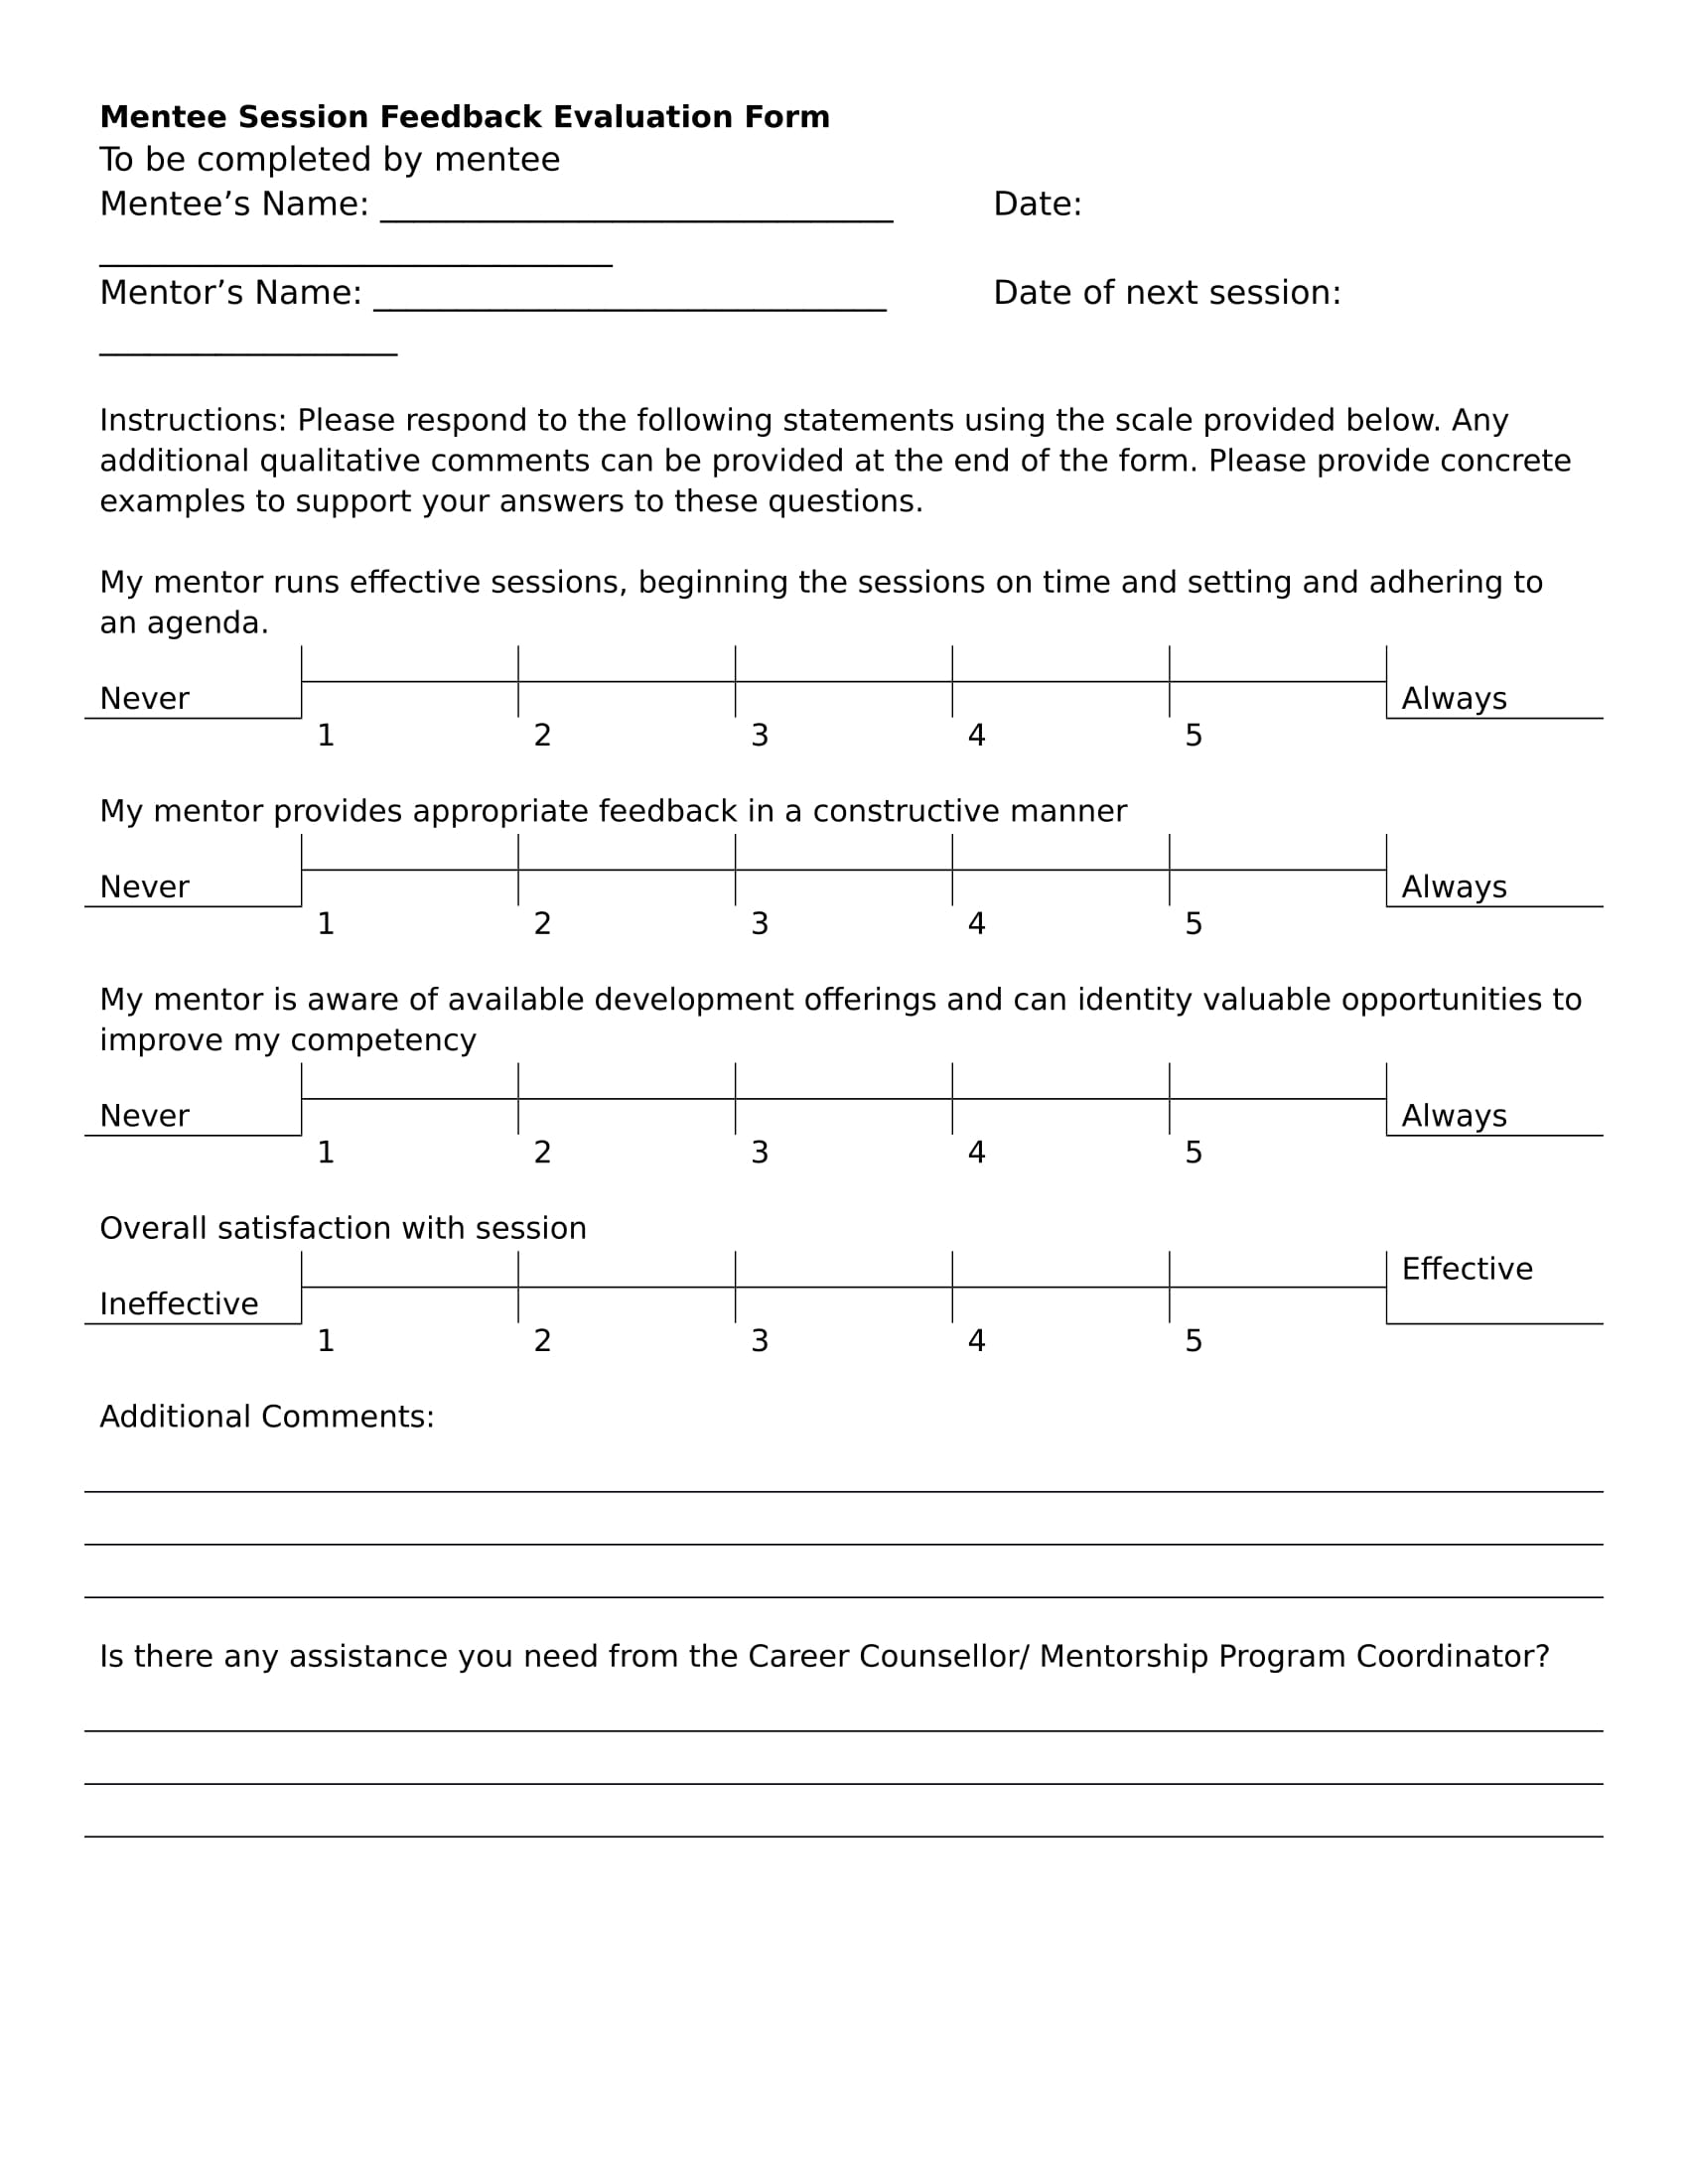 mentee session feedback evaluation form 1